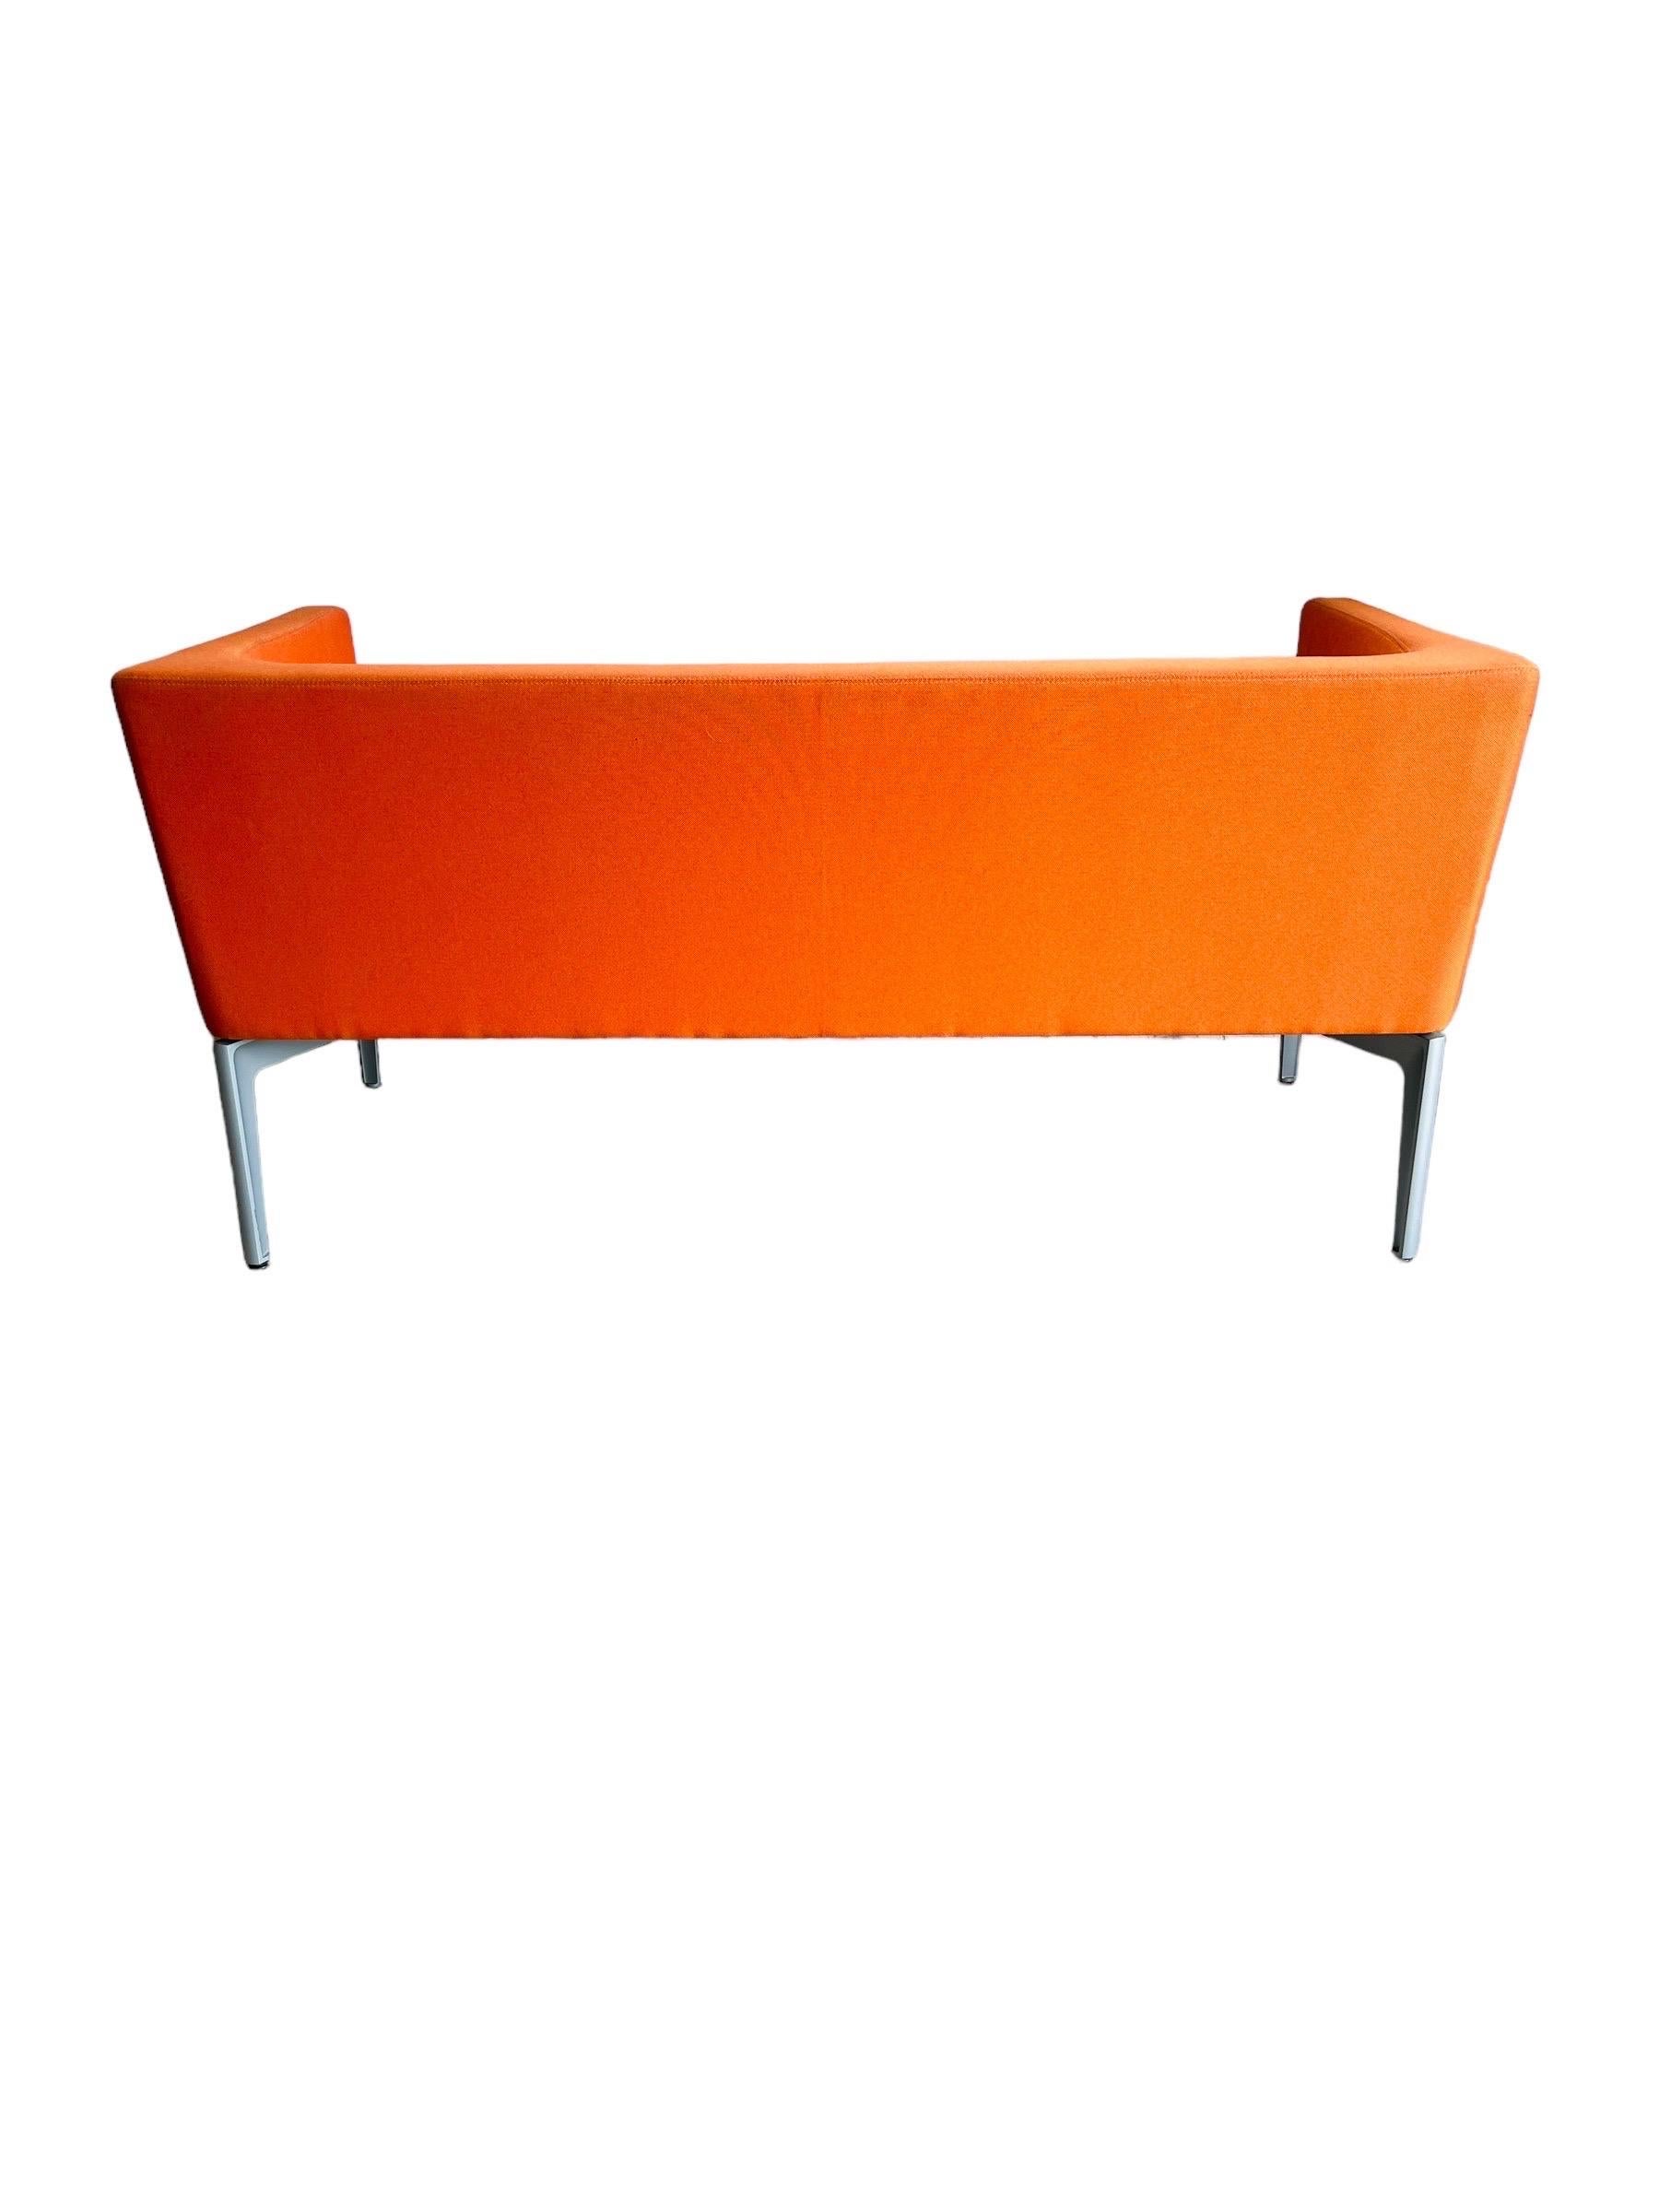 Steelcase Bivi Rumble Seat Collection: Vibrant Orange Modern Sofa 1